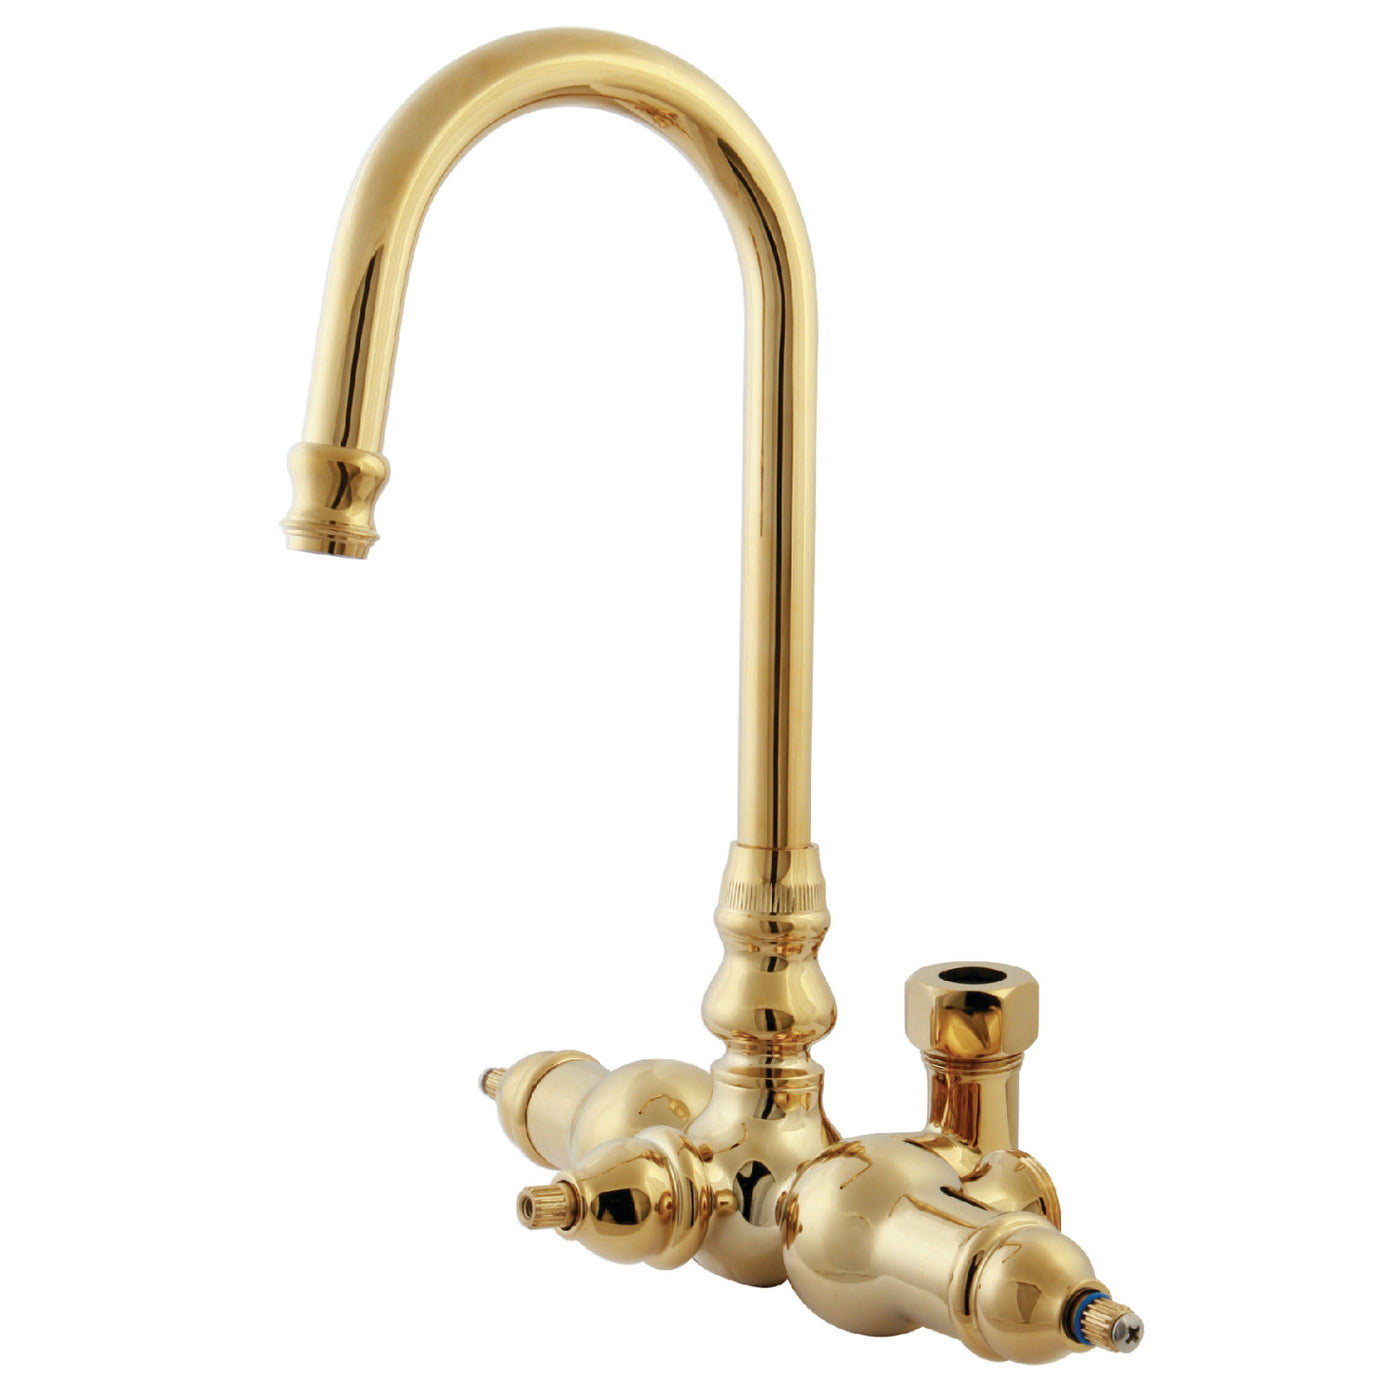 Elements of Design ED200-2 Gooseneck Tub Faucet Body, Polished Brass